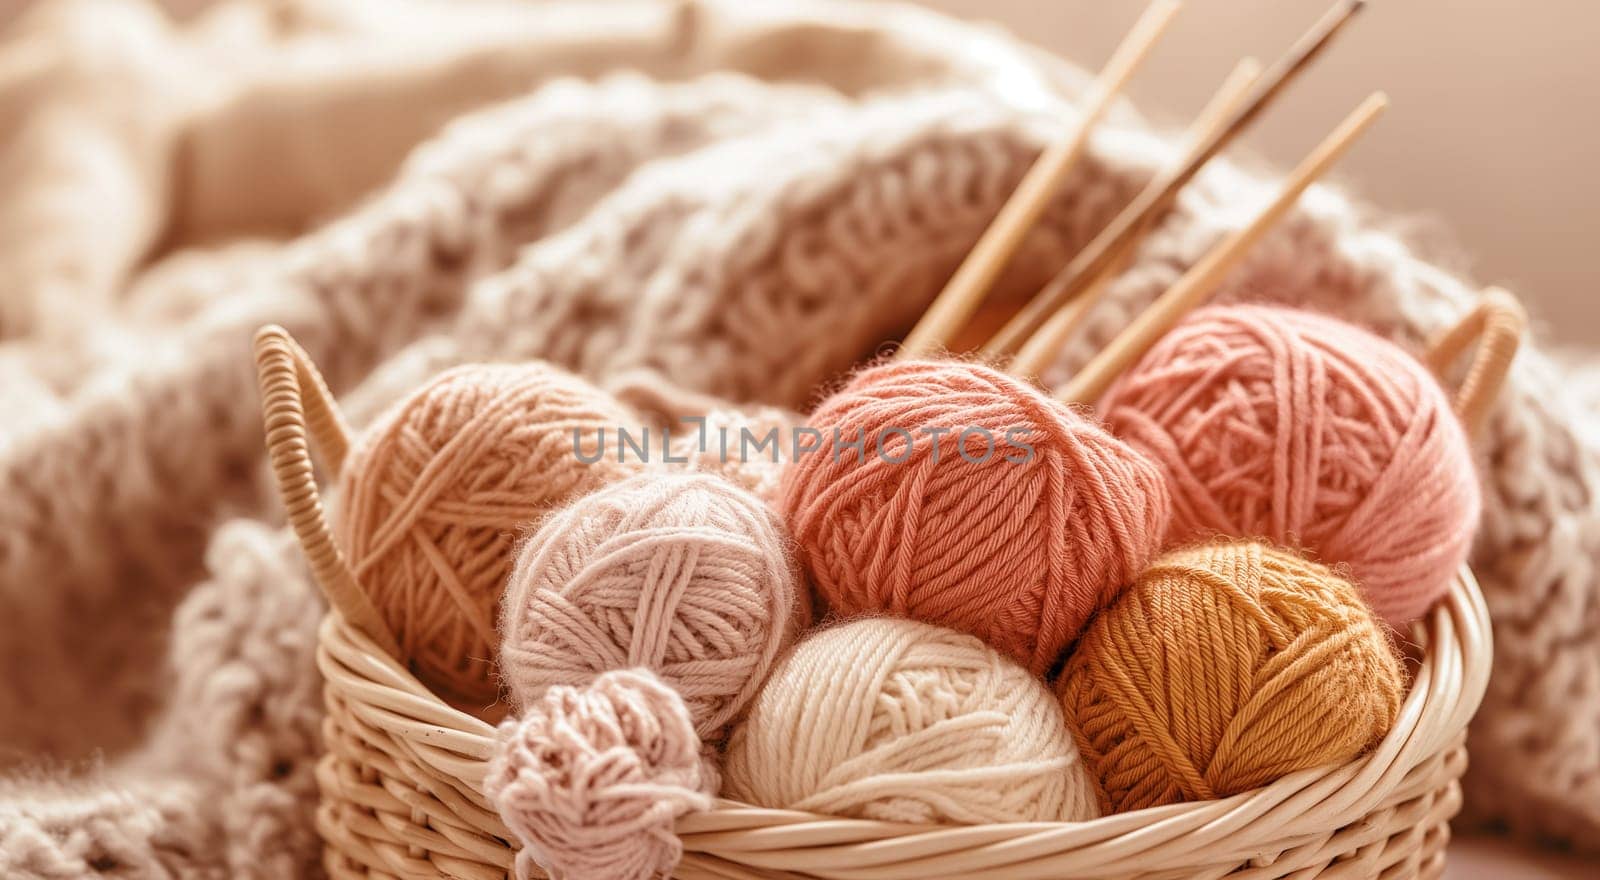 Yarn balls in a basket with knitting needles, warm tones by kizuneko